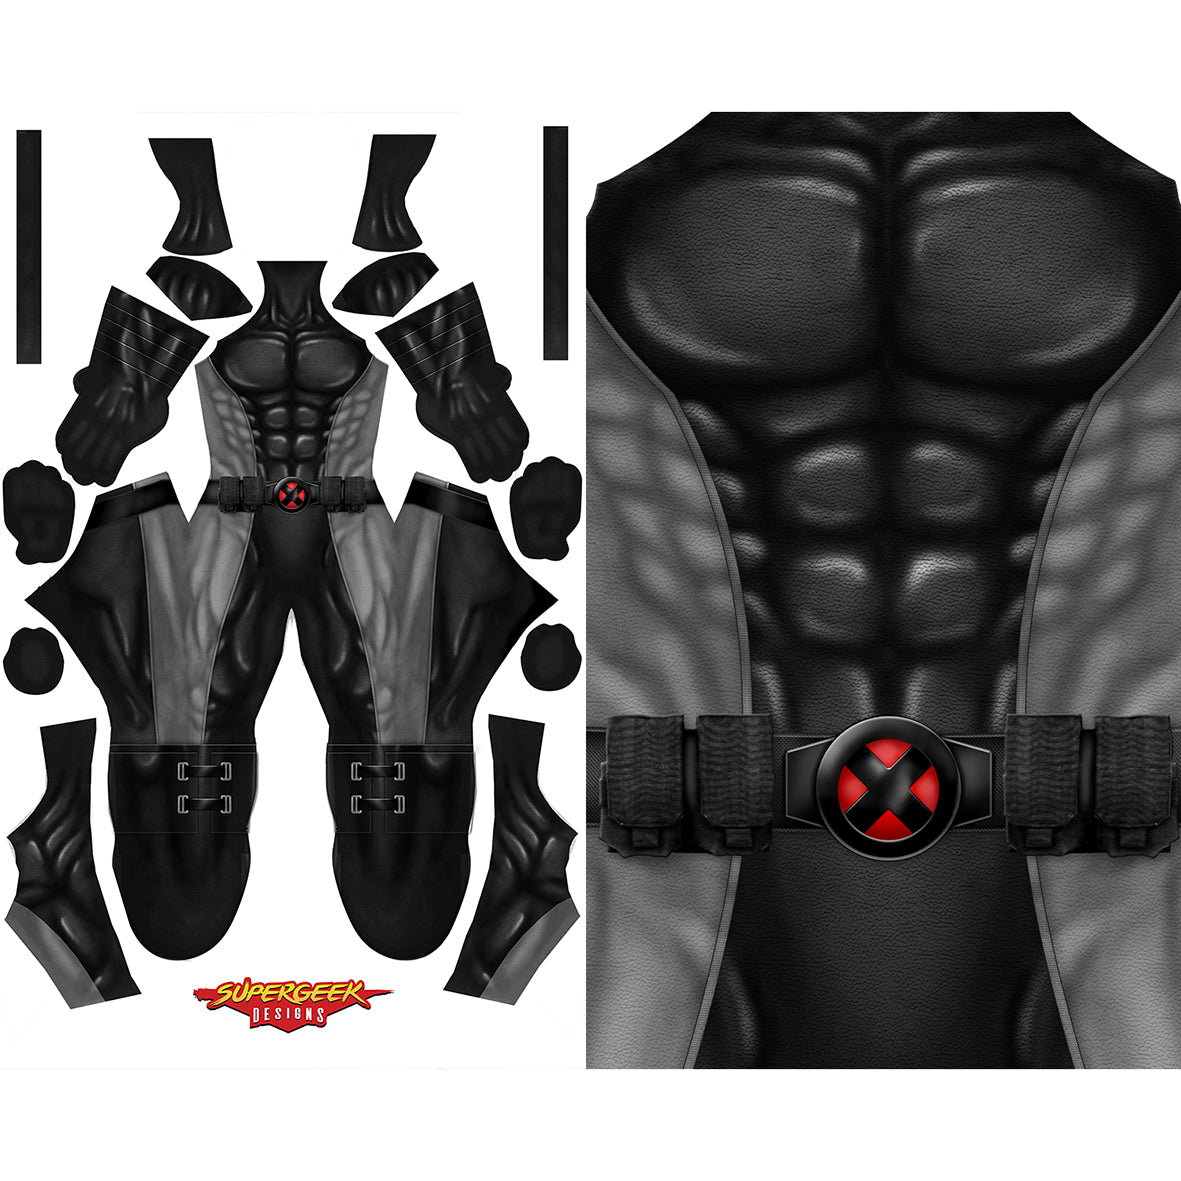 WOLVERINE XFORCE bodysuit